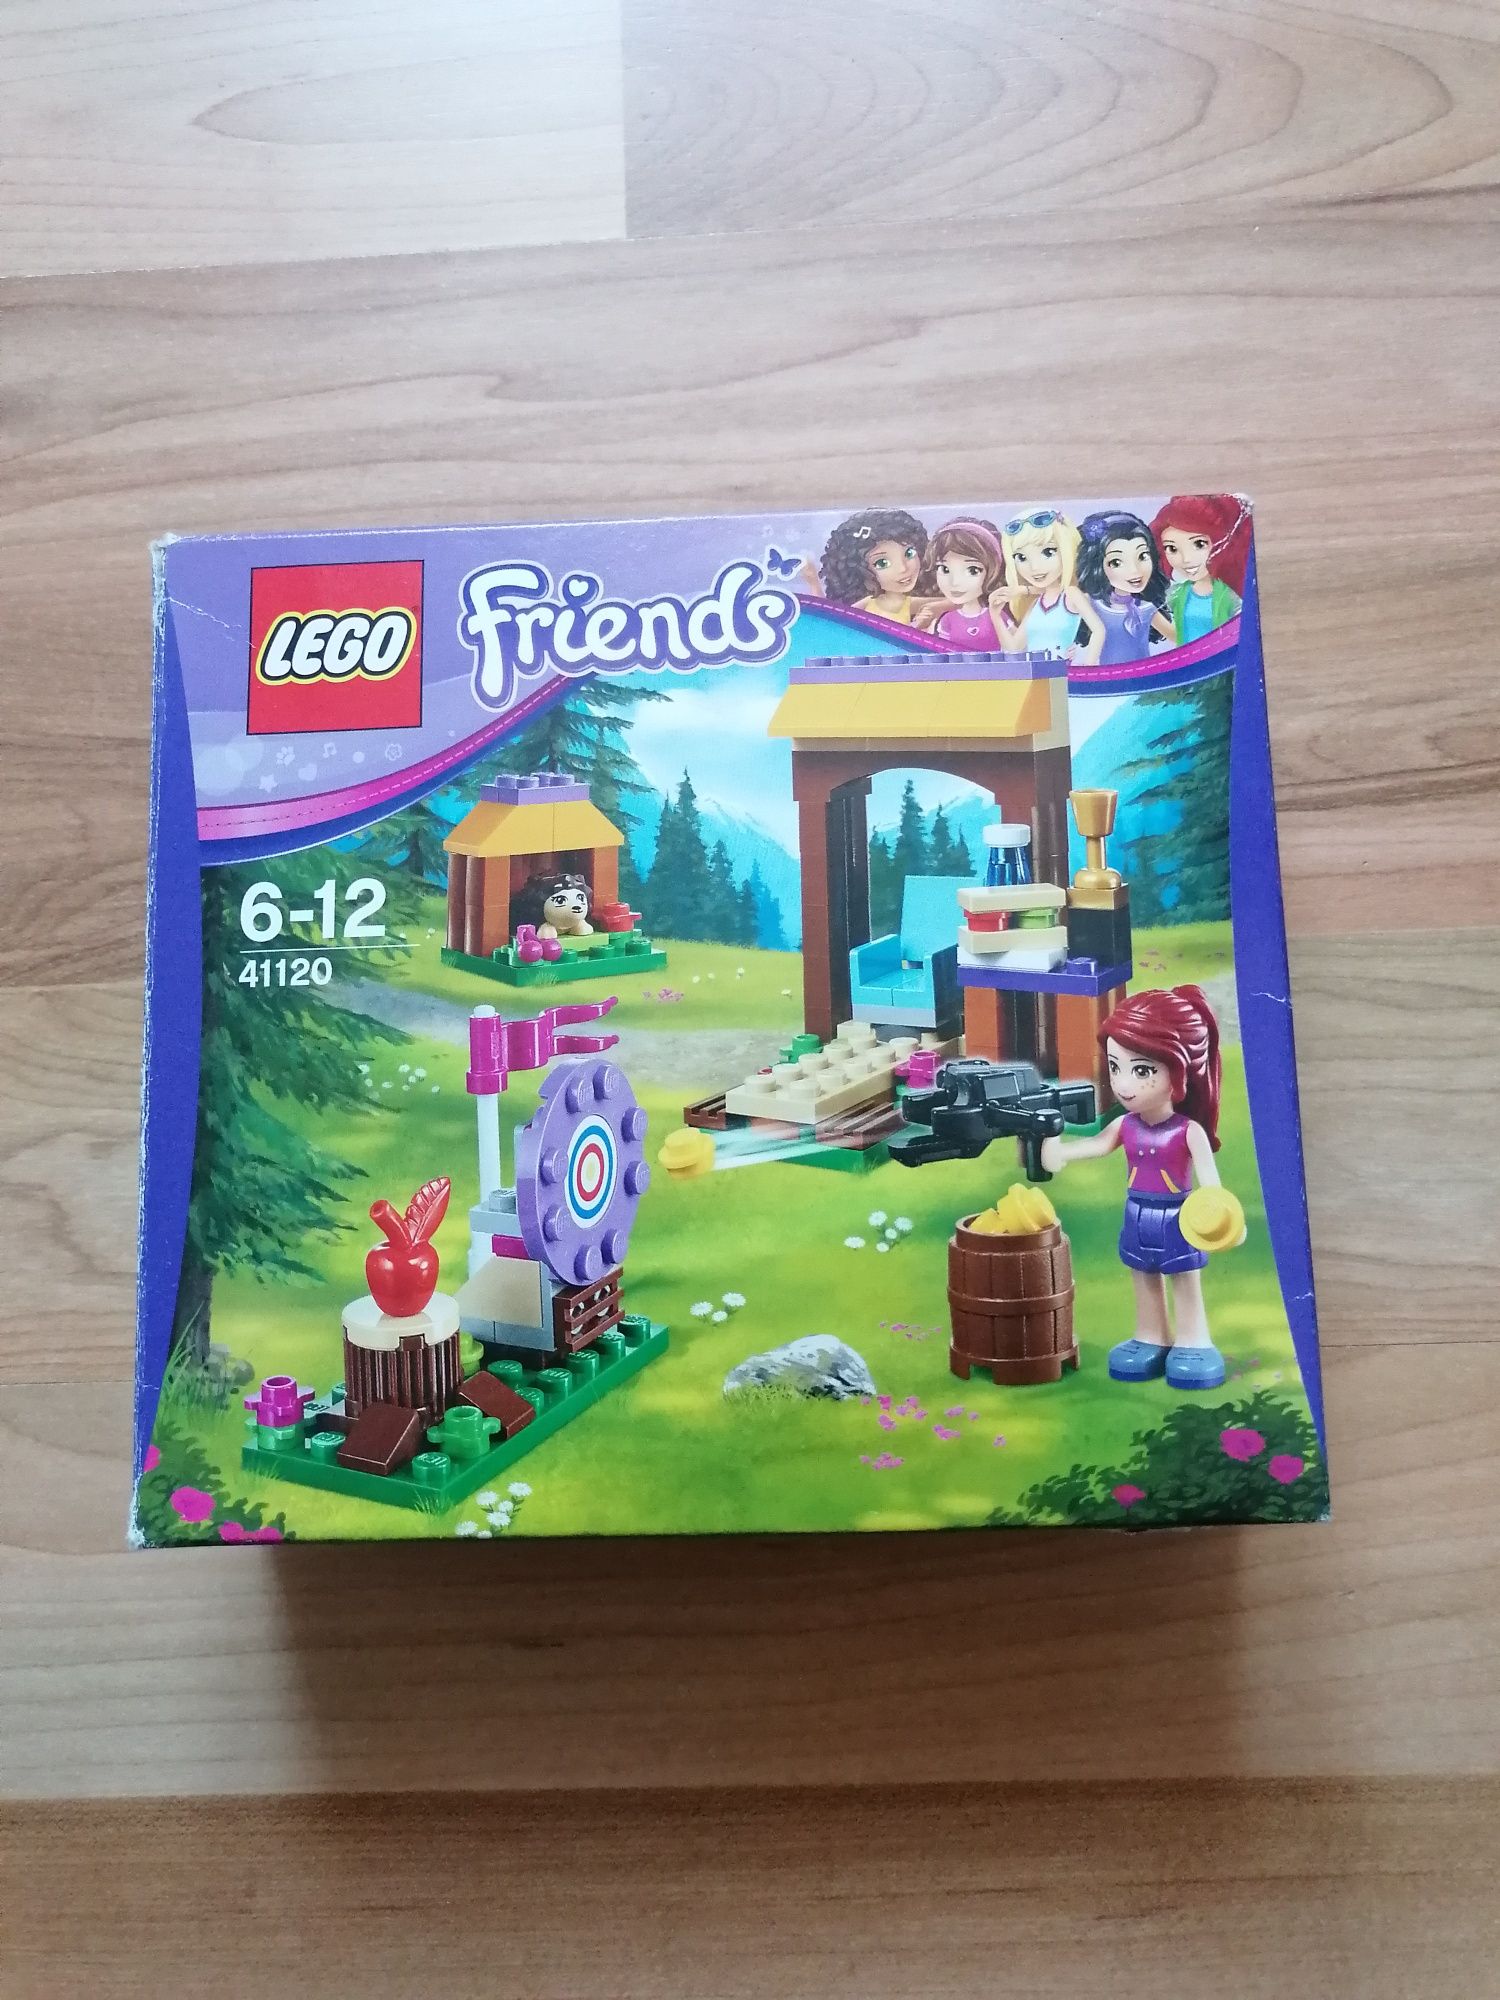 Lego friends 41120